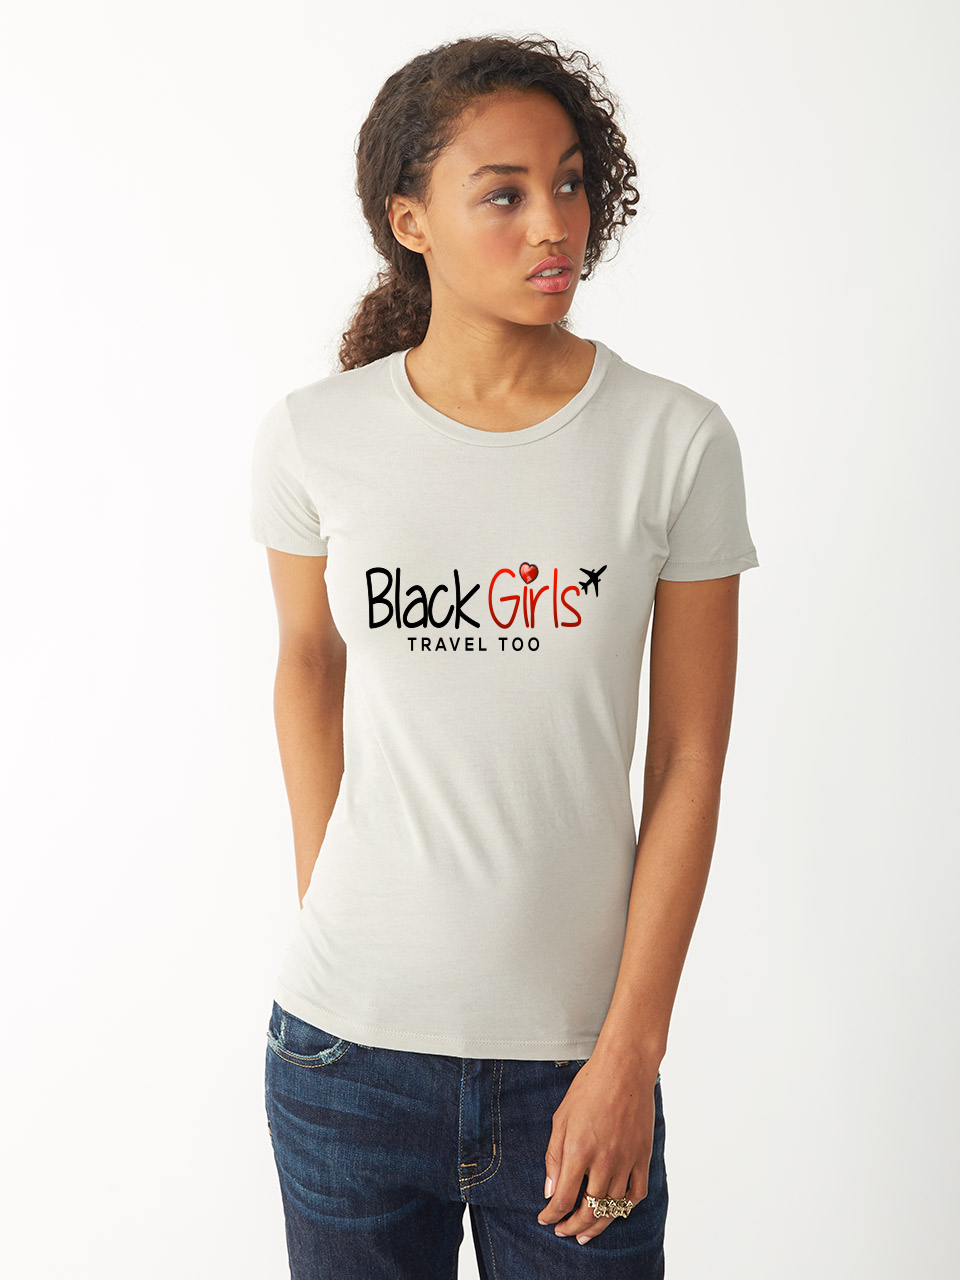 Download Signature Black Girls Travel Too T-Shirt